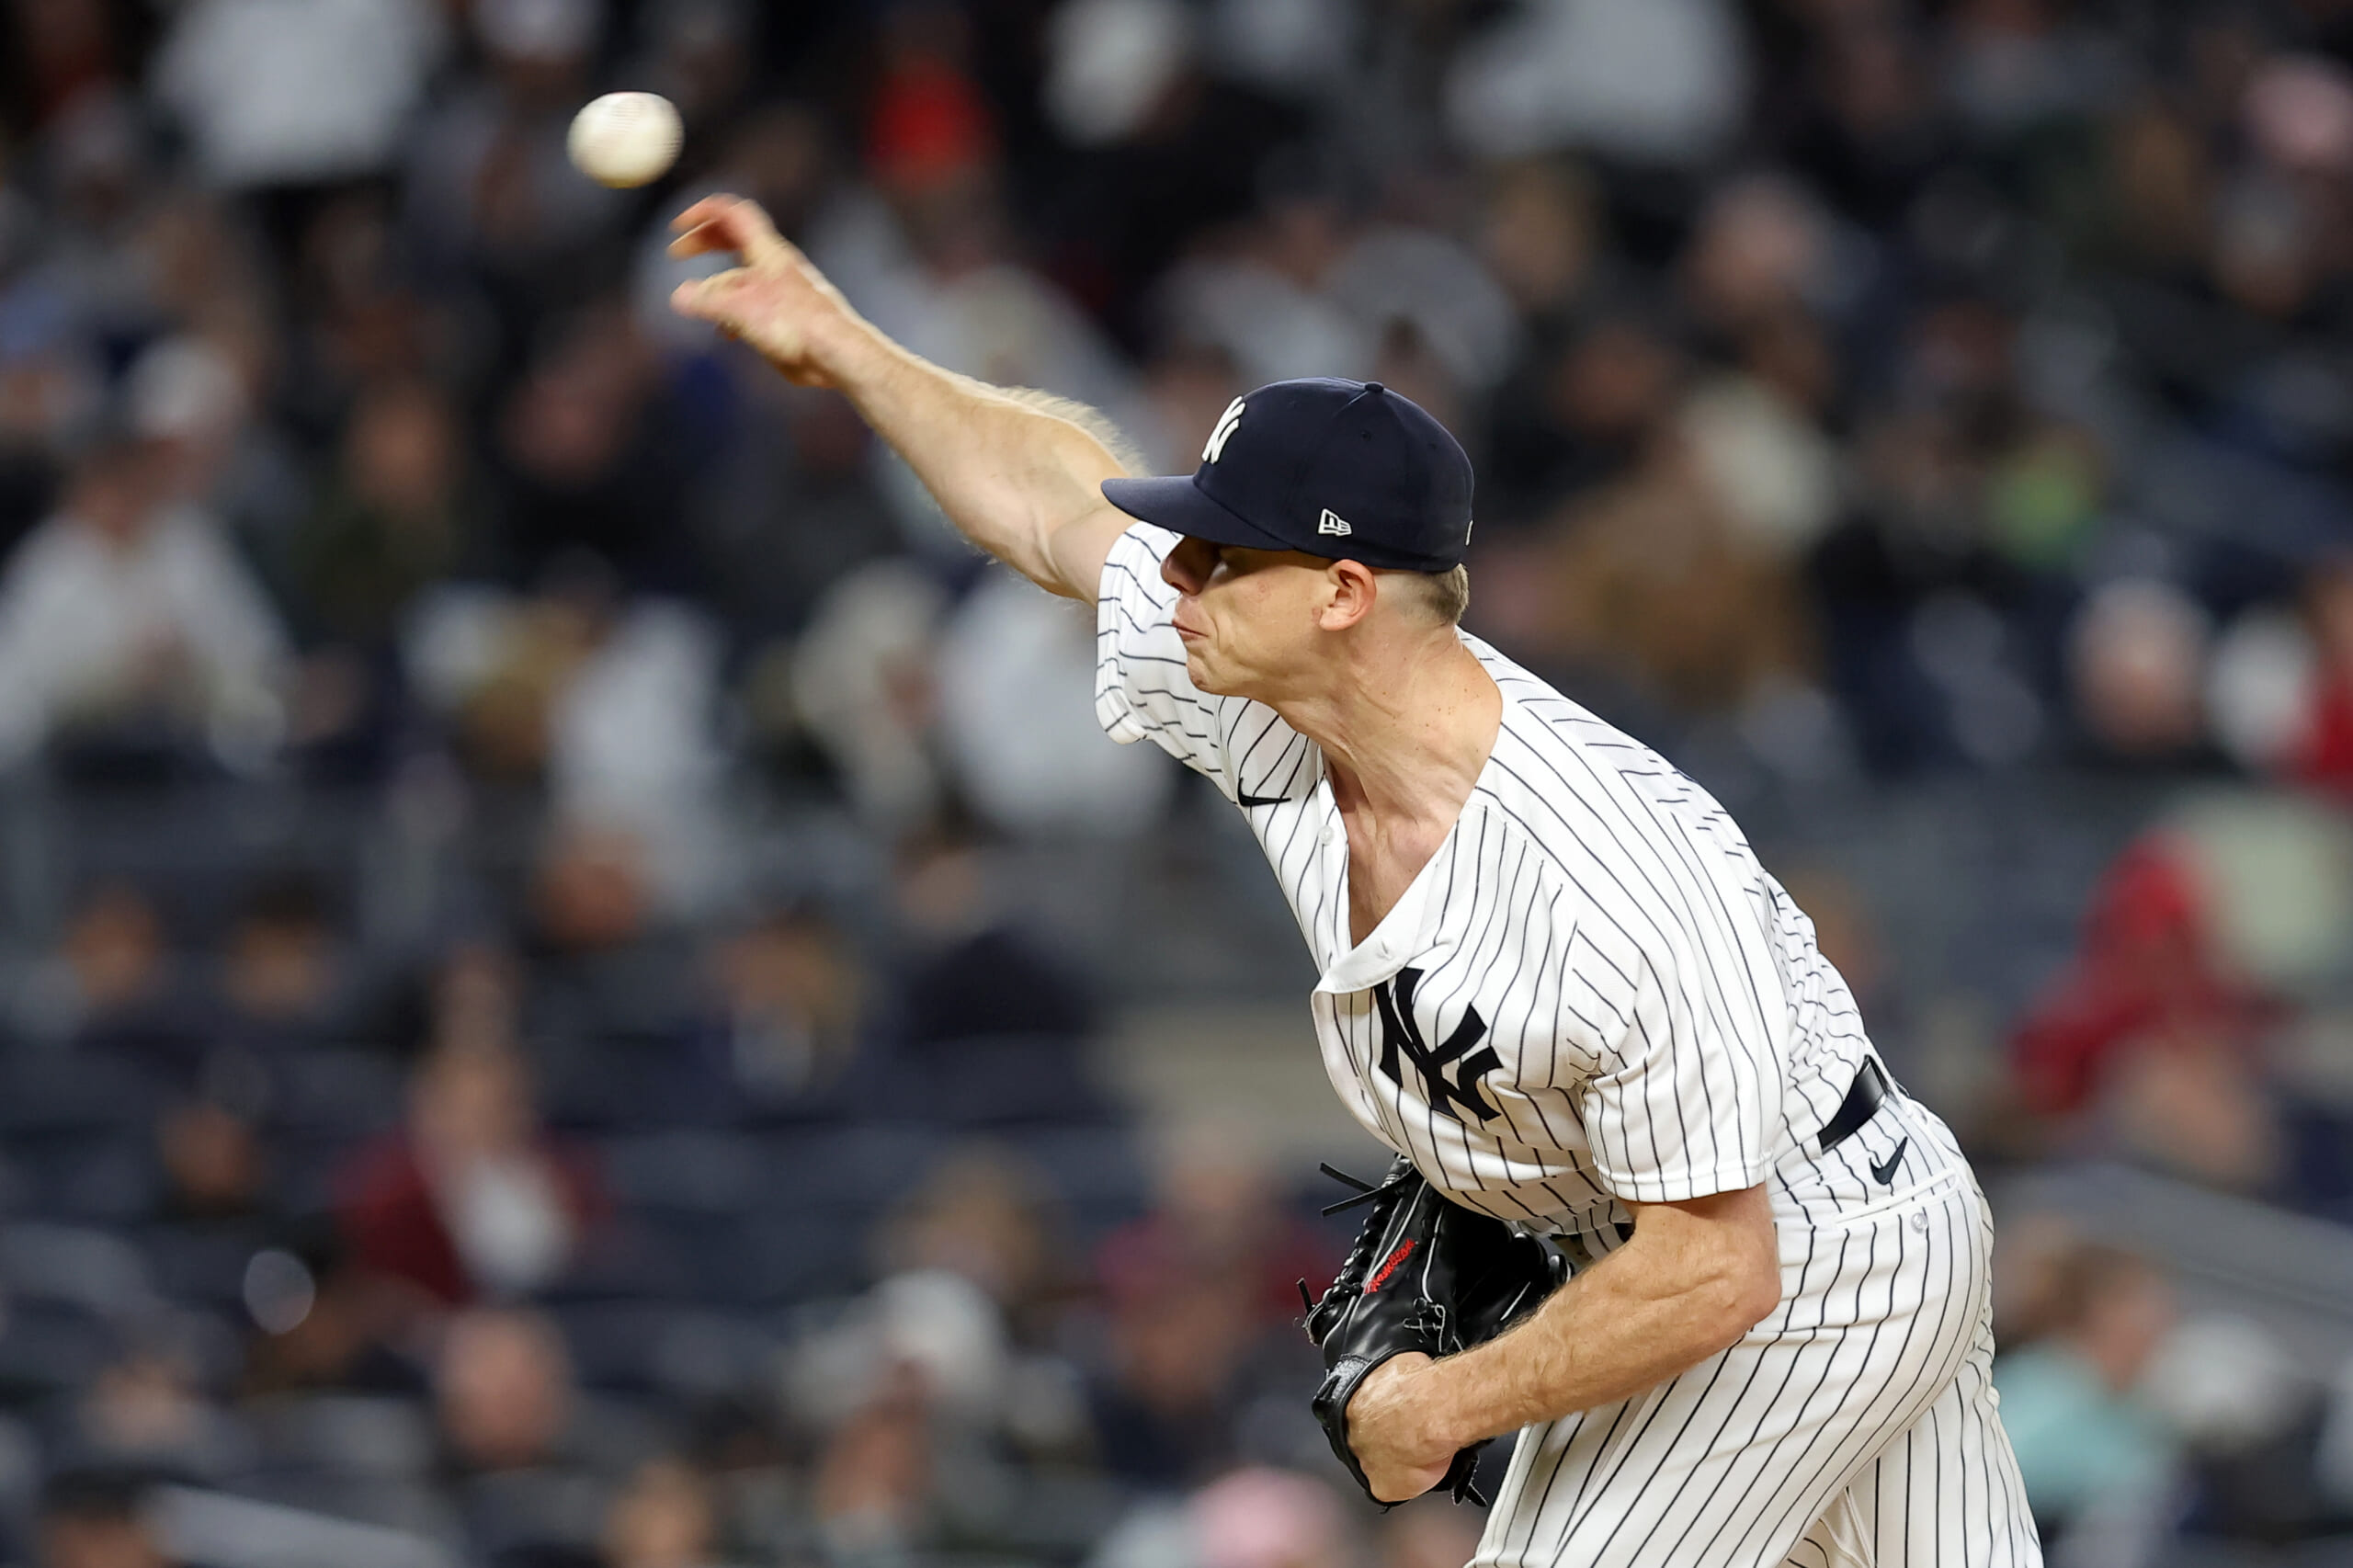 The Yankees stumbled upon a bullpen gem